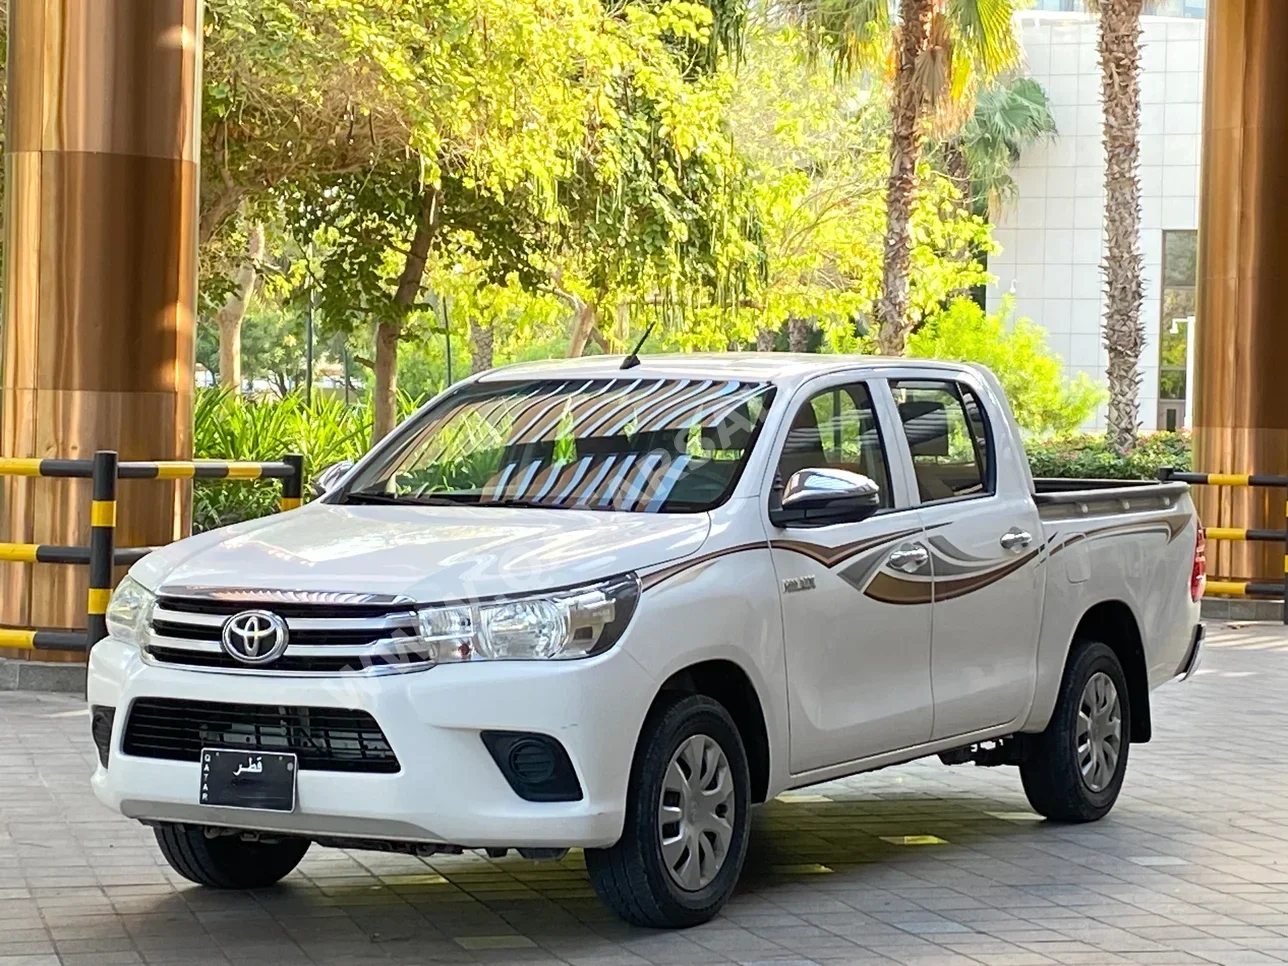 Toyota  Hilux  2019  Manual  252,000 Km  4 Cylinder  Rear Wheel Drive (RWD)  Pick Up  White